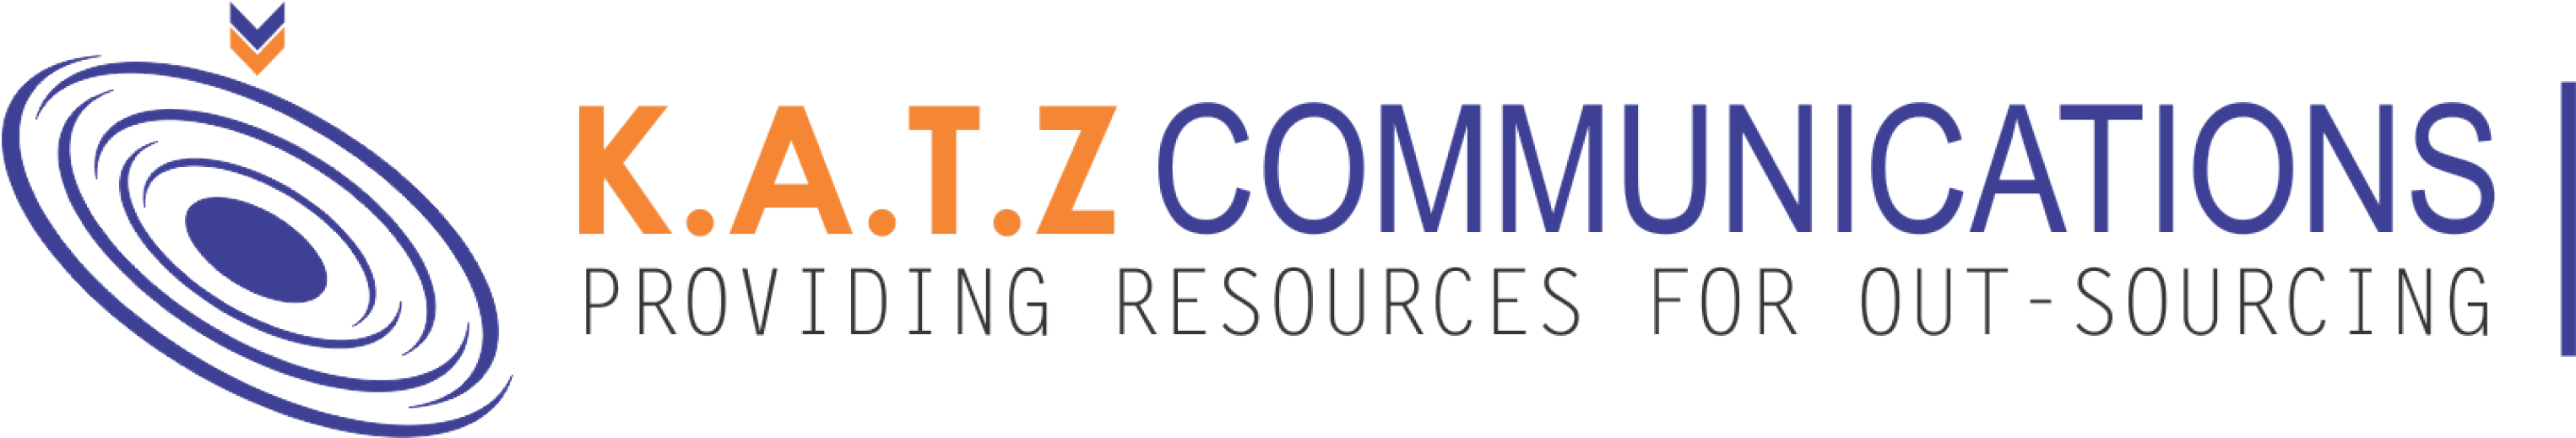 KATZ Communications Logo